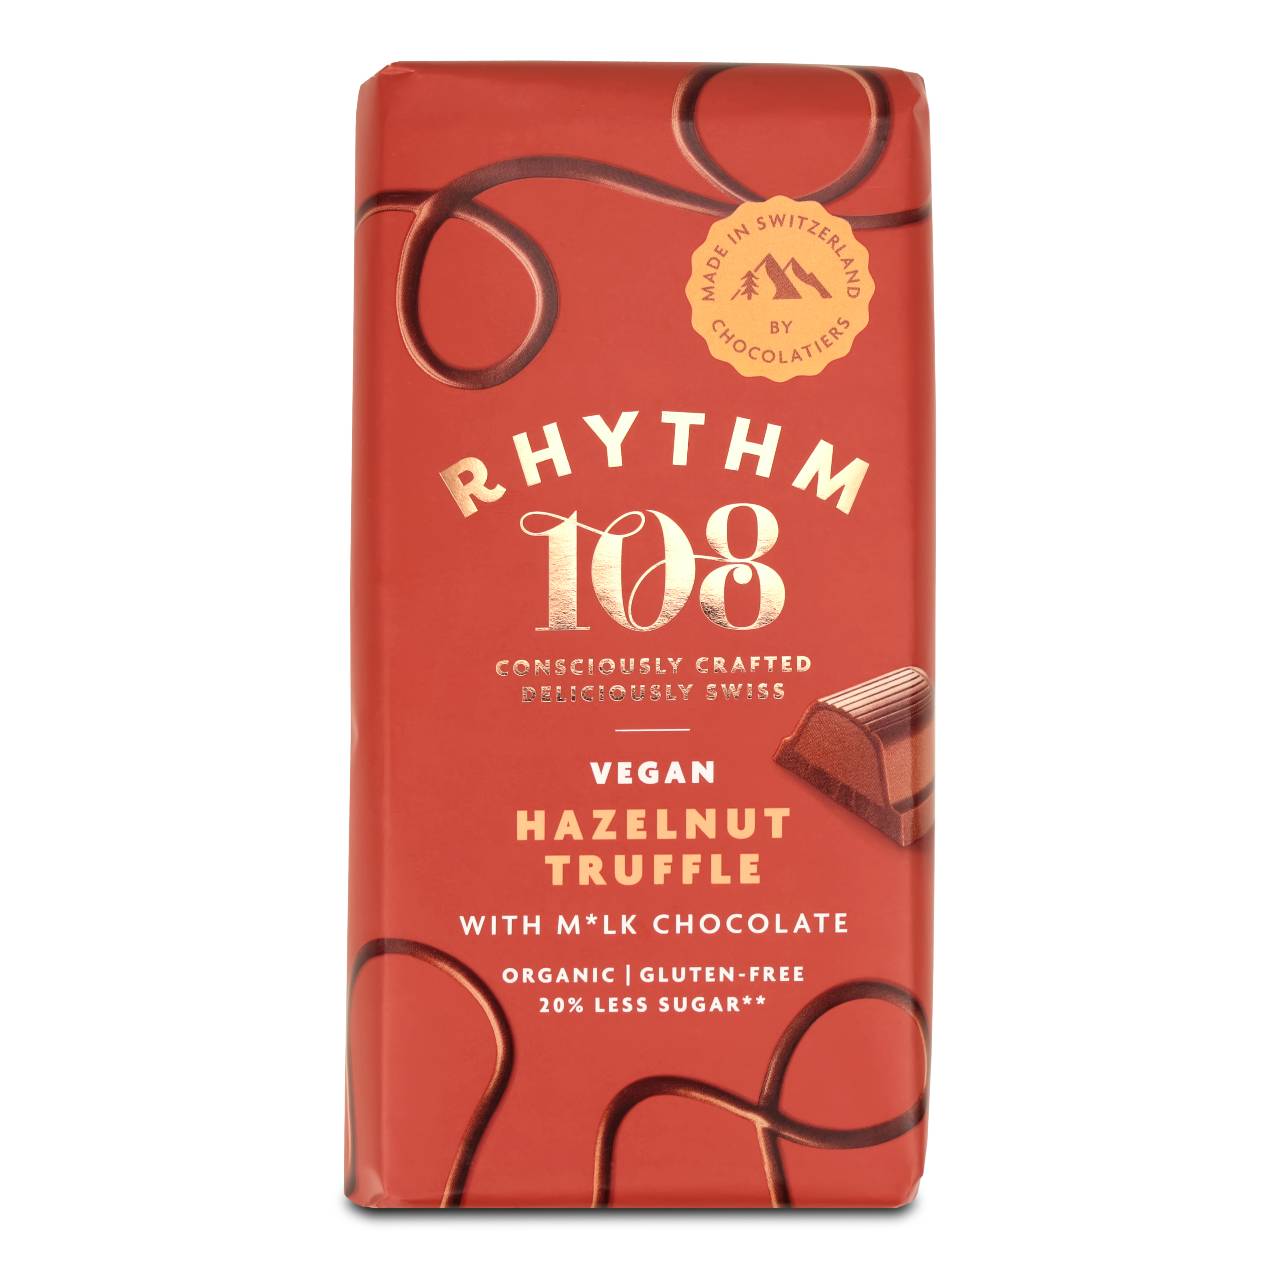 rhythm 108 vegan hazelnut truffle bar